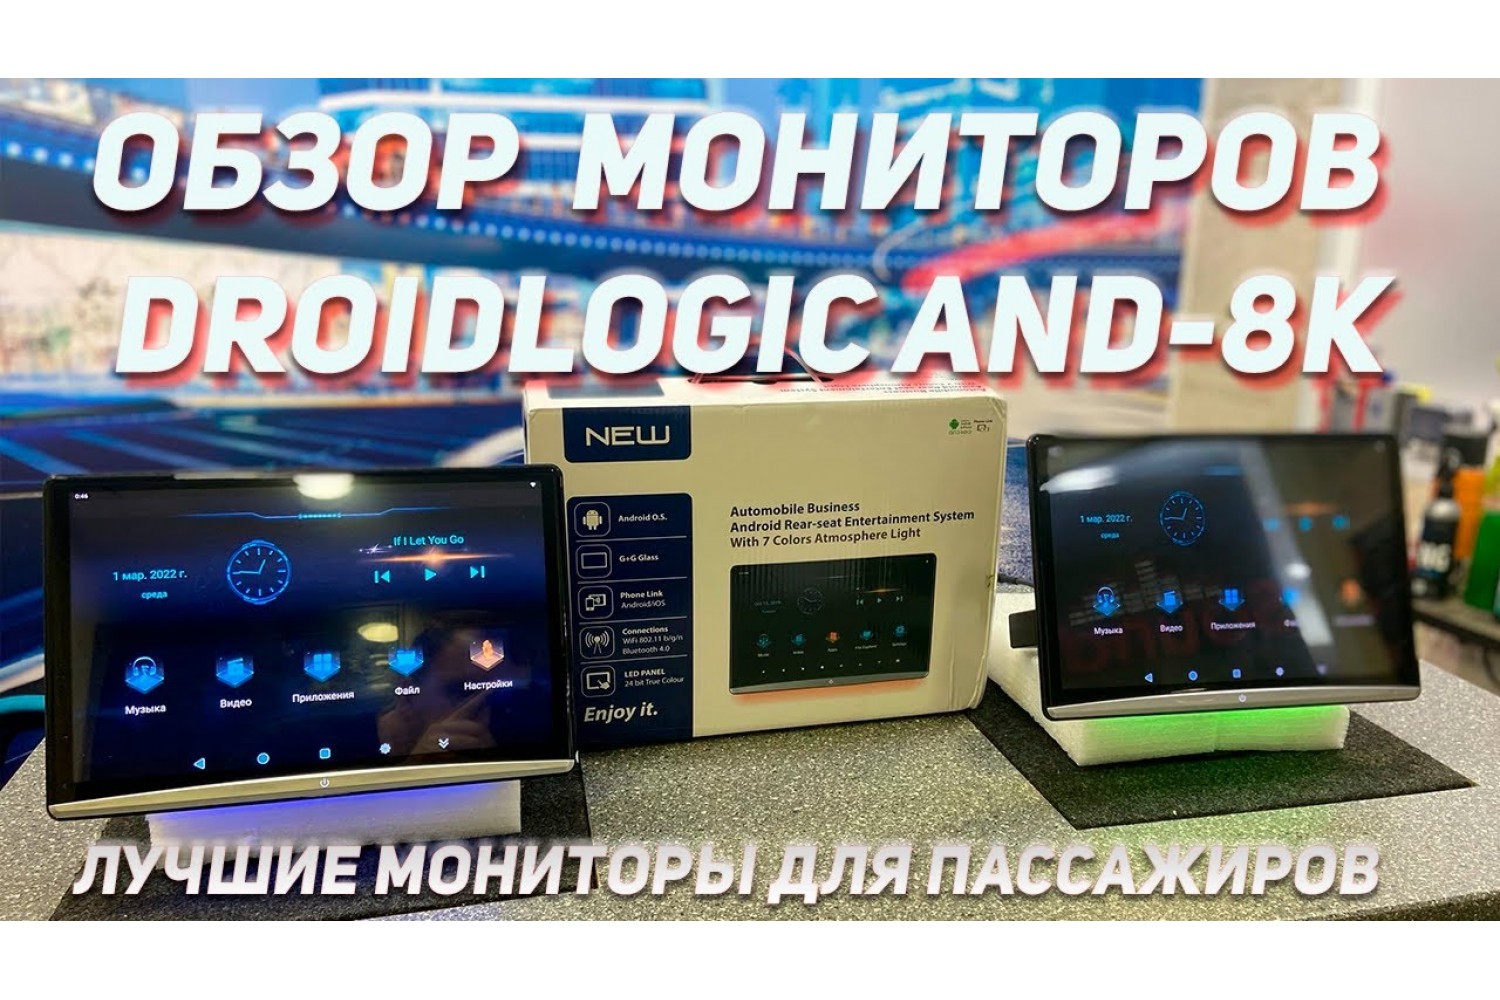 Обзор Мониторов Droidlogic AND-8K